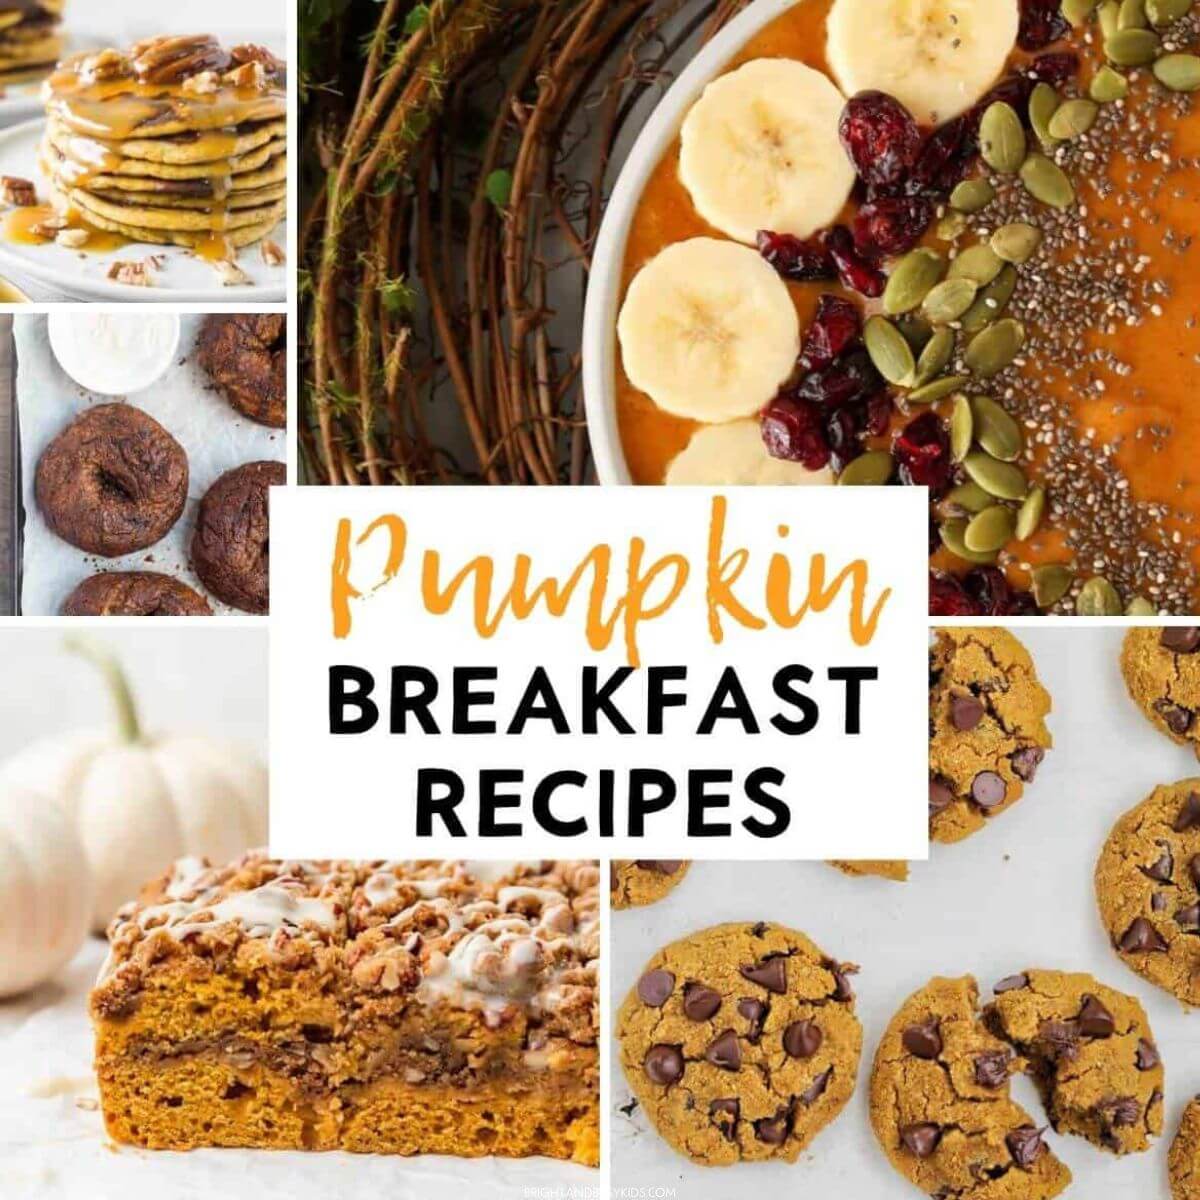 Easy Pumpkin Breakfast Recipes for Fall